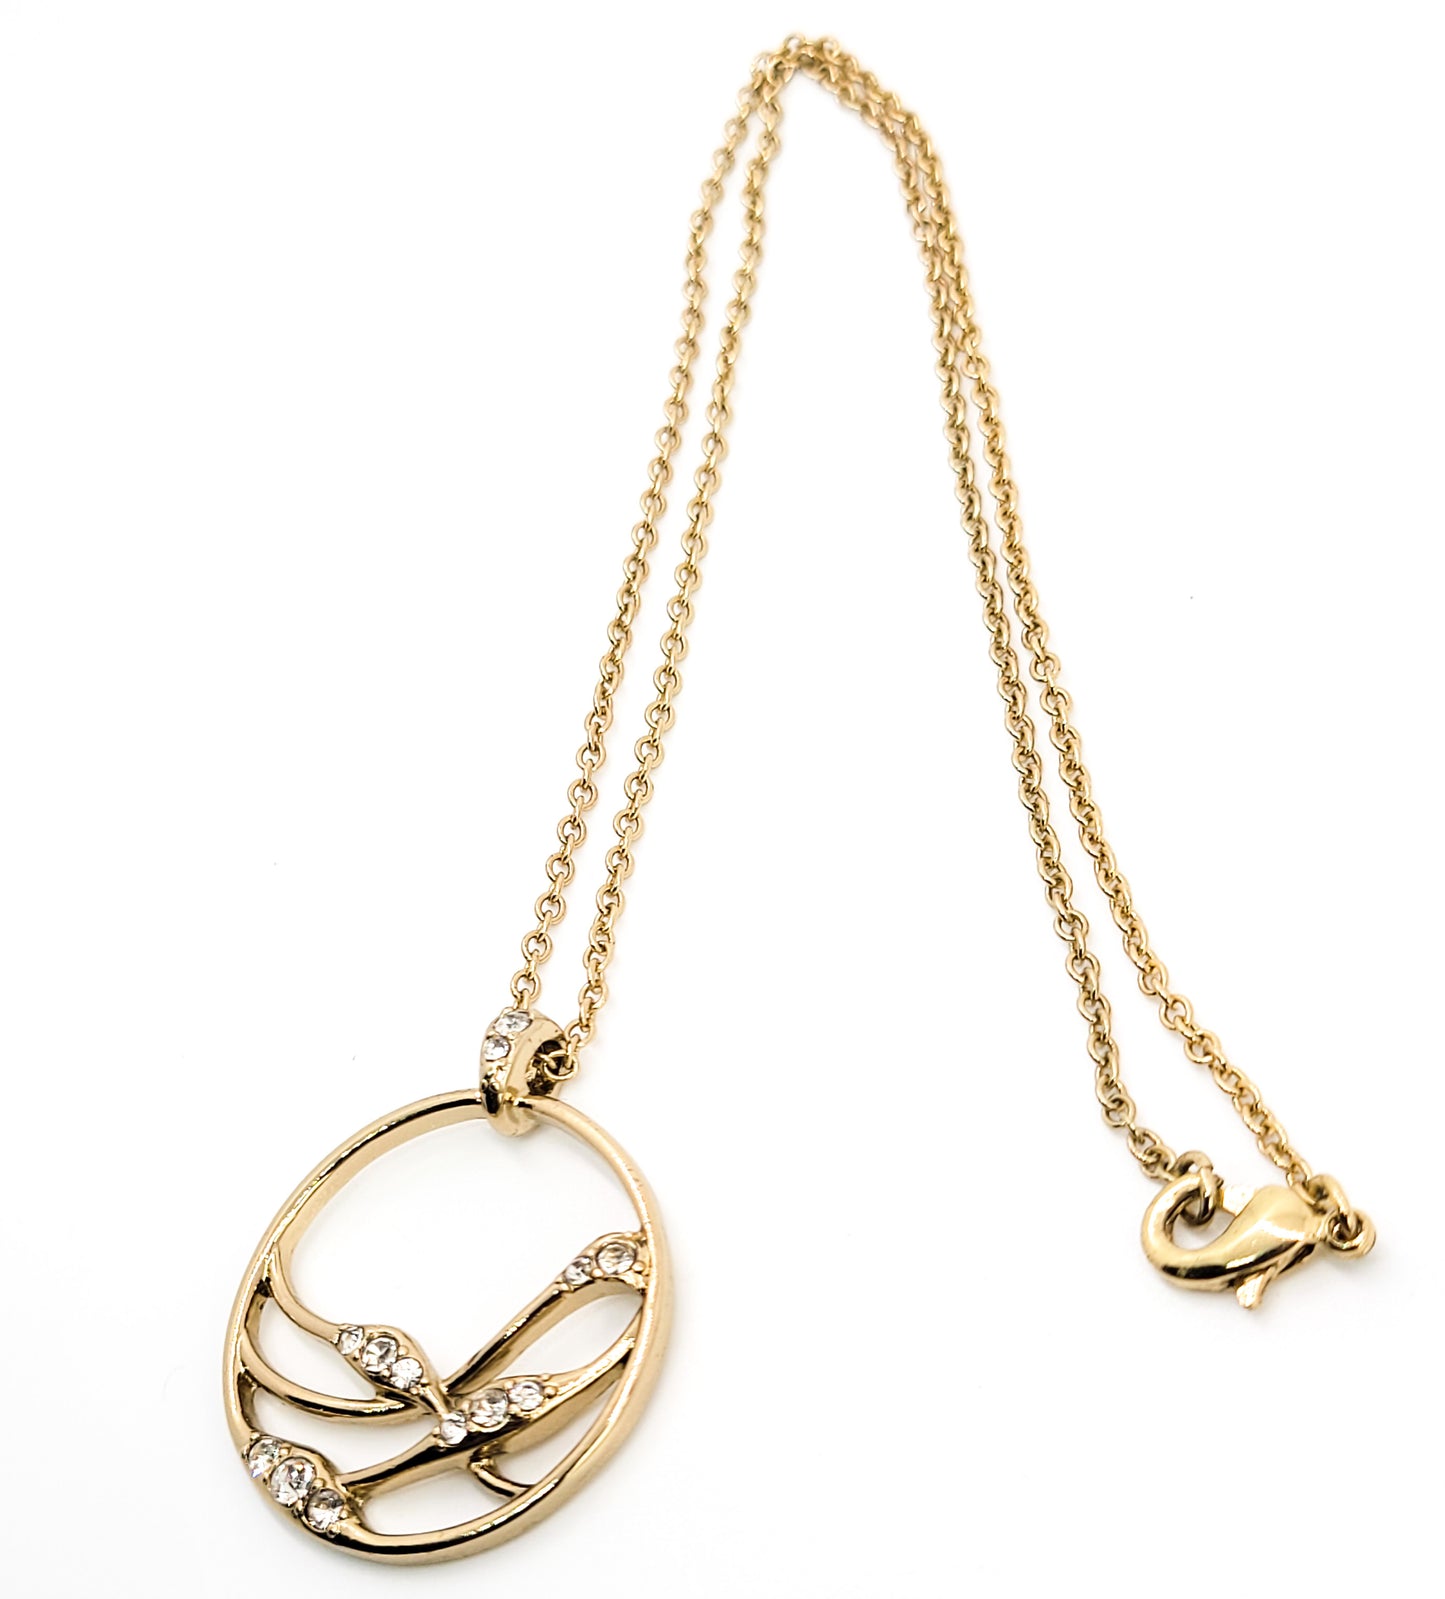 Avon NRT signed vintage gold plated circle rhinestone pendant necklace